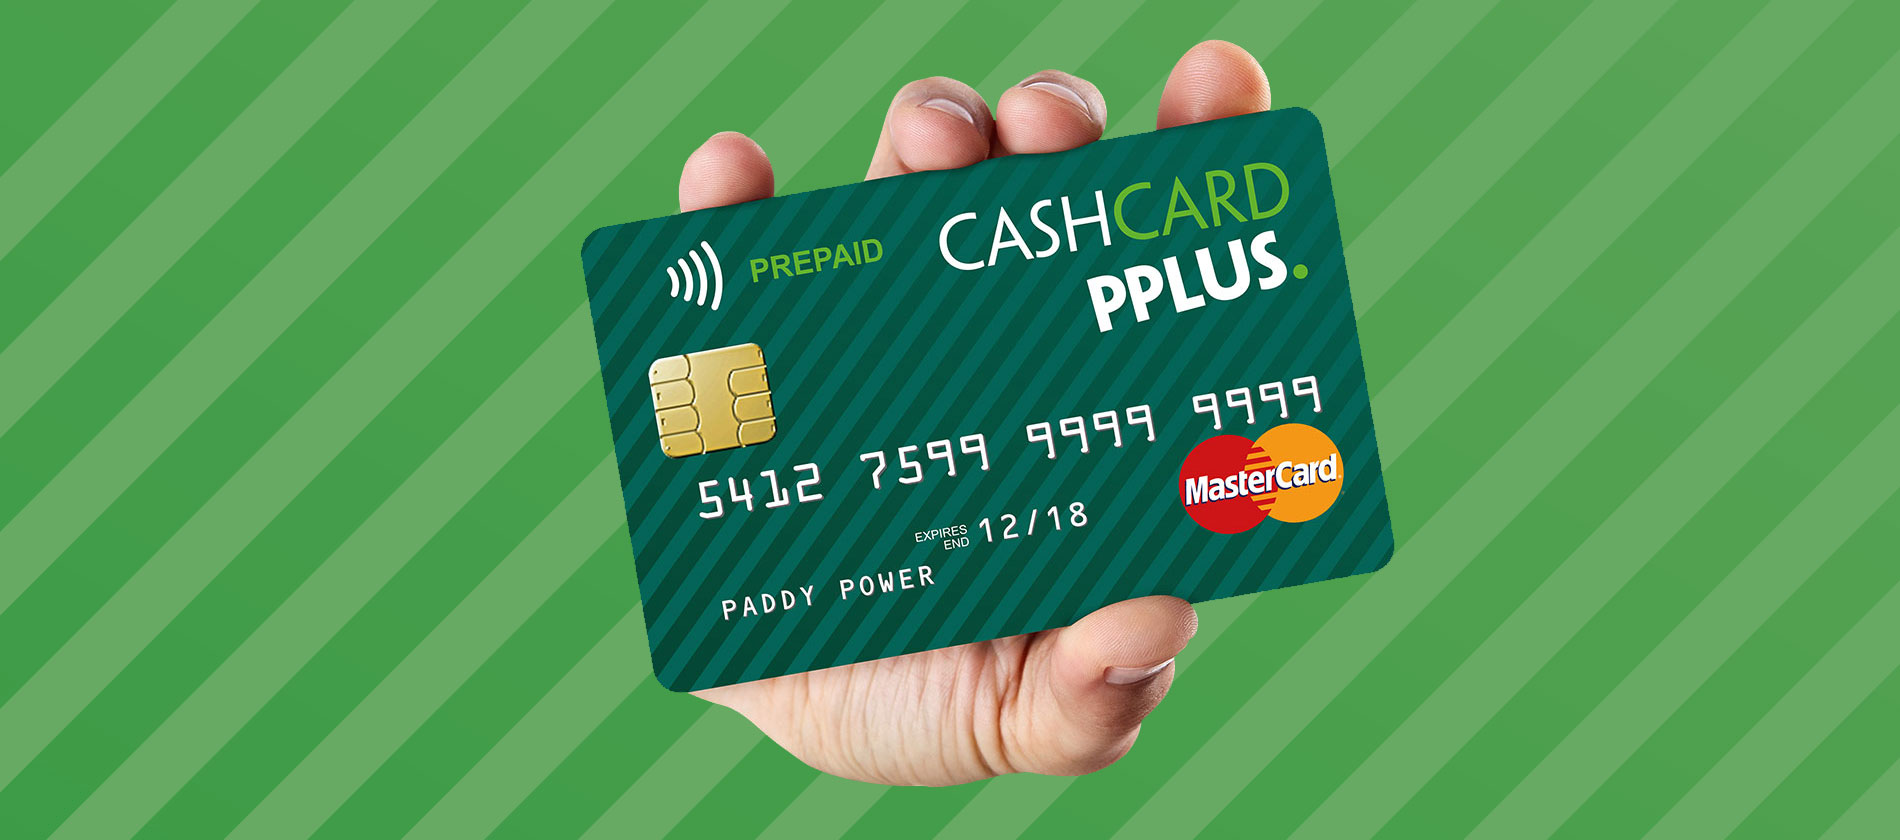 PP cash card pplus